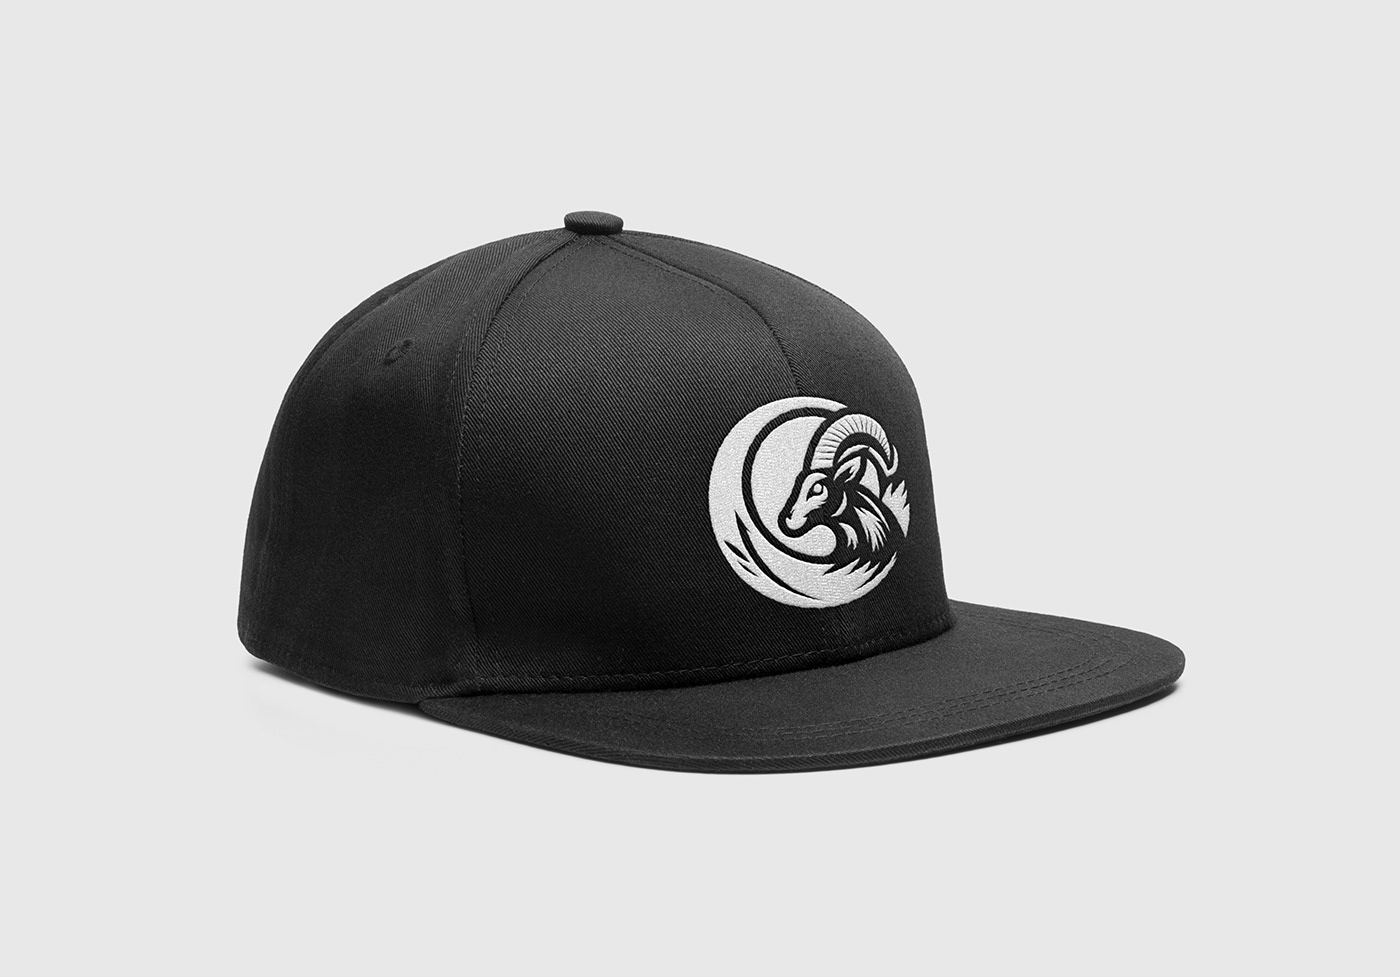 hat logo, cap logo, cool cartoons, graduation hat logo, white baseball cap